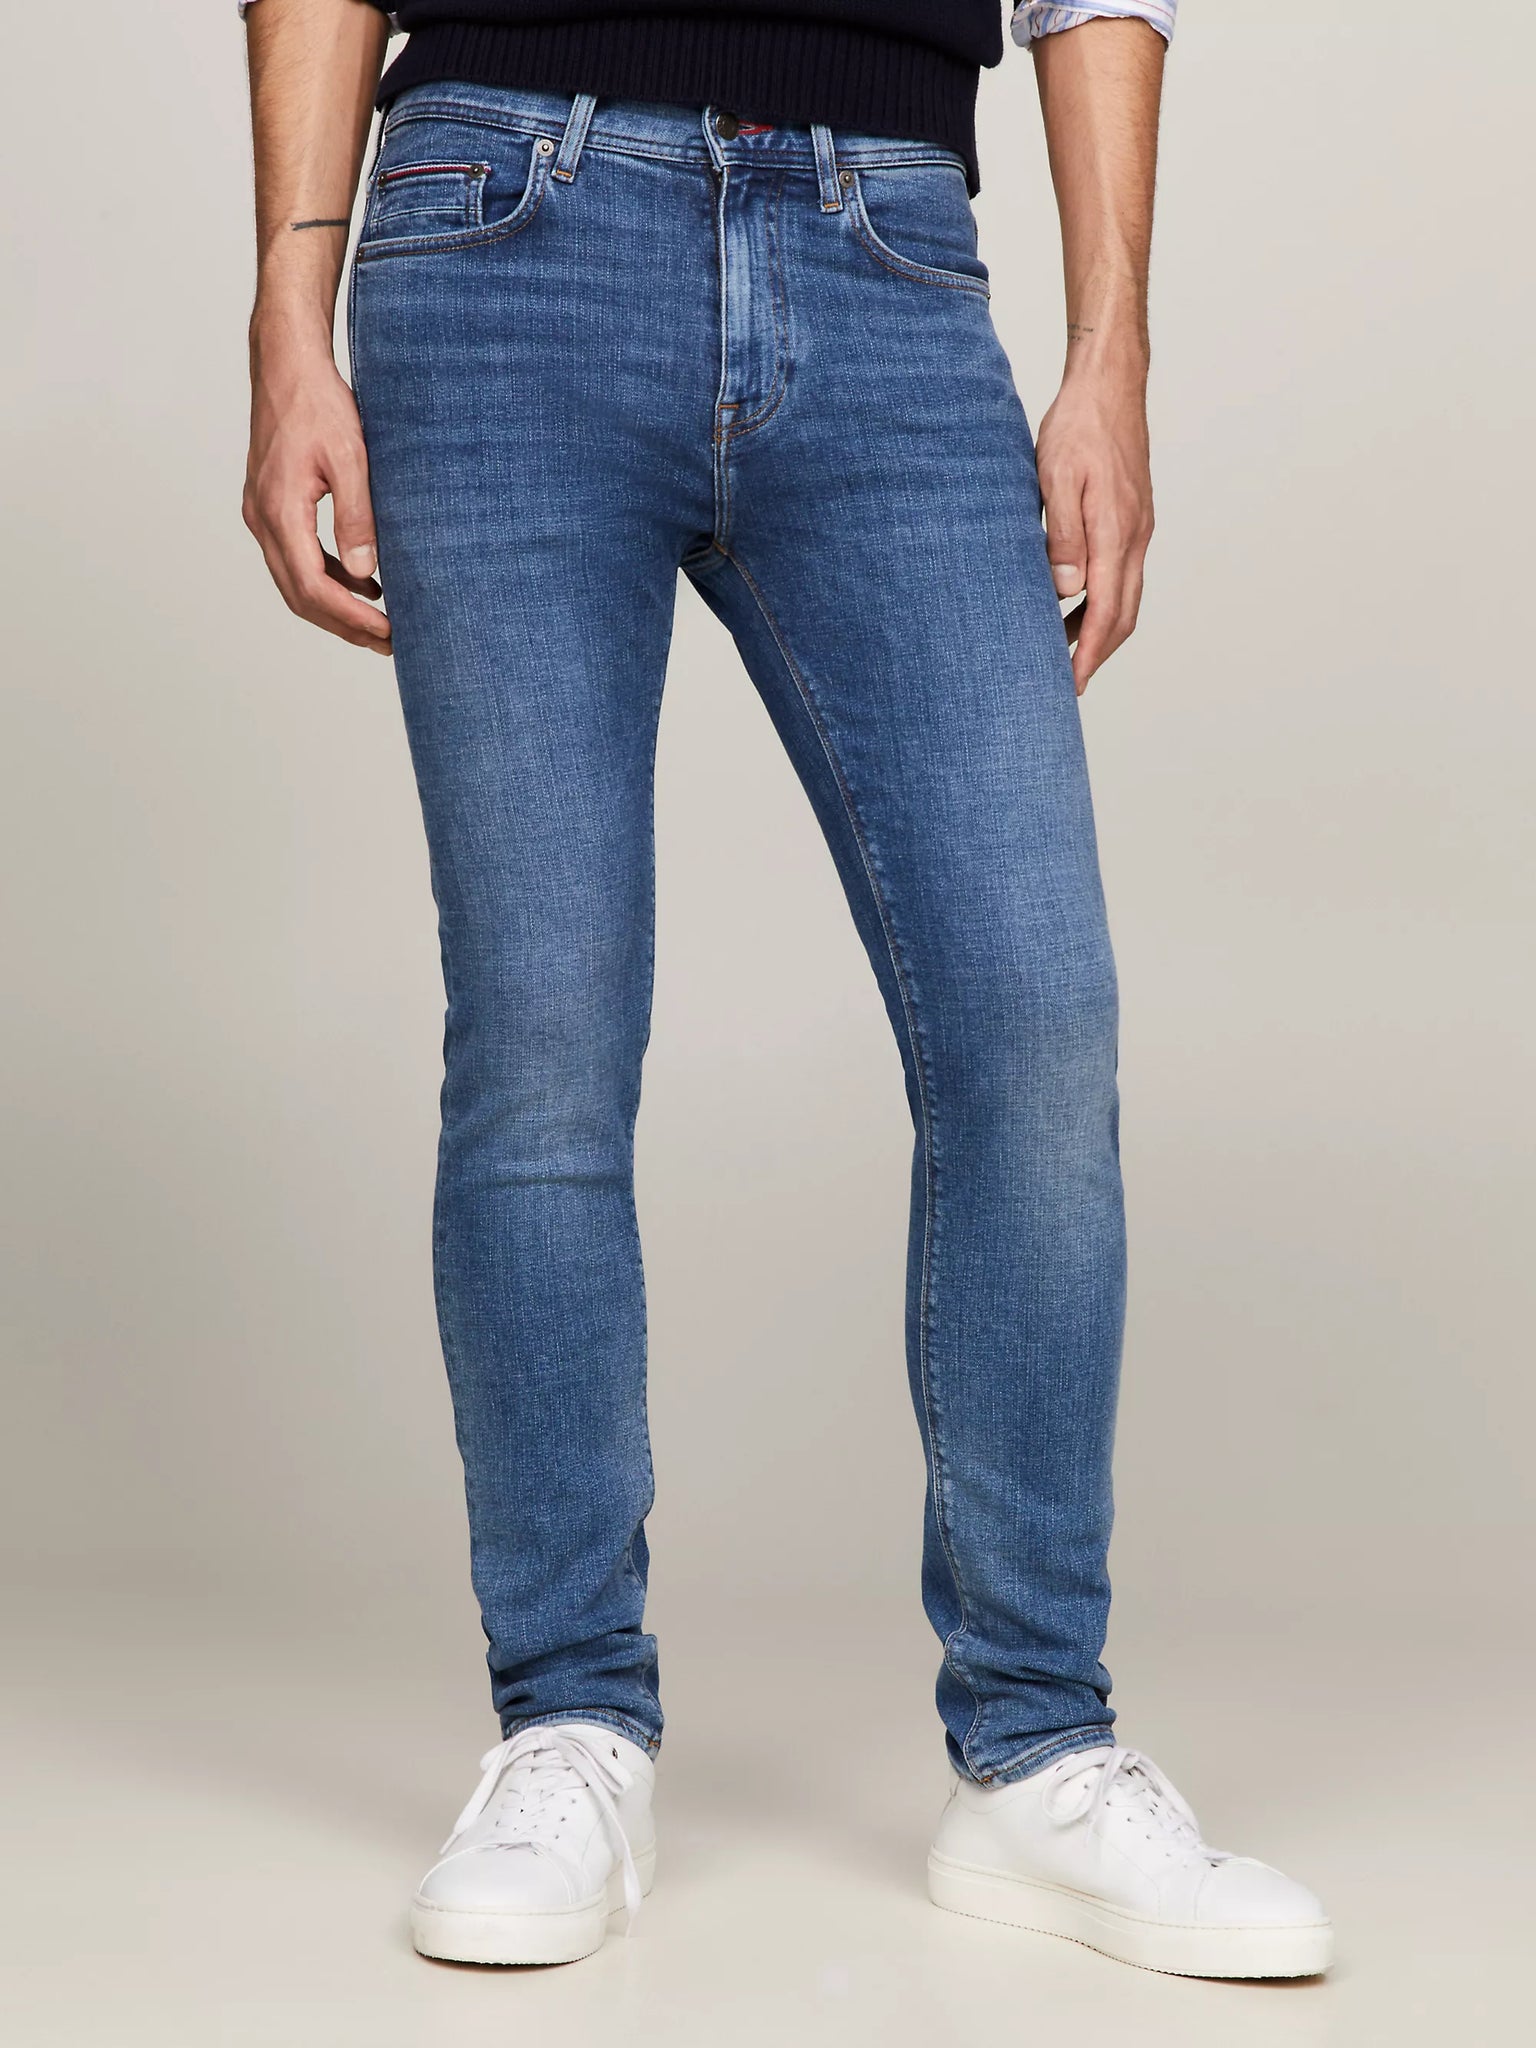 Jeans slim fit - Tommy Hilfiger